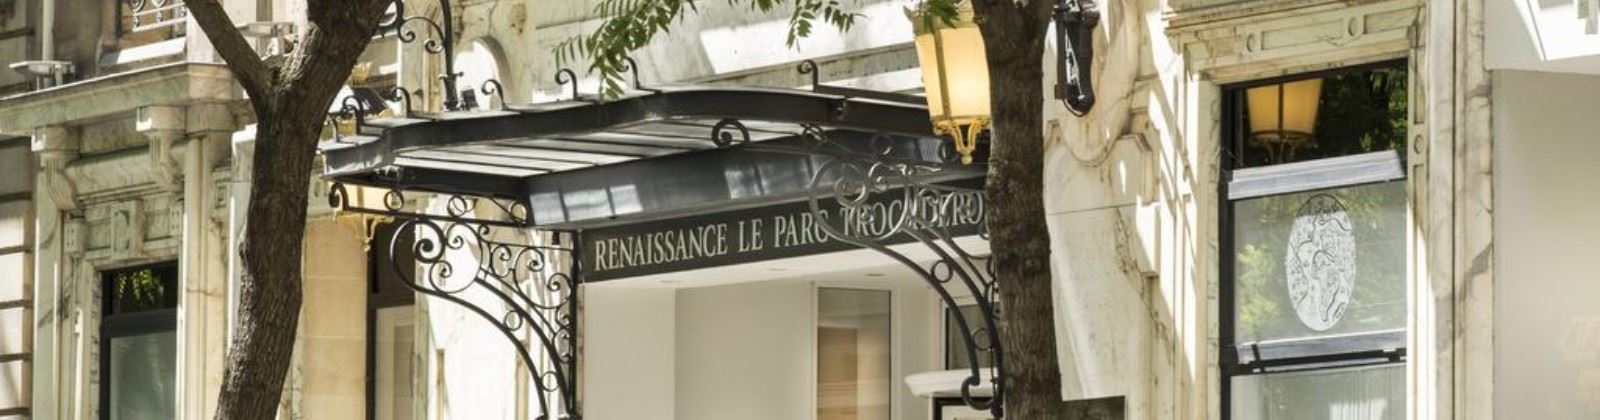 OLEVENE image - renaissance-le-parc-trocadero-olevene-hotel-restaurant-convention-